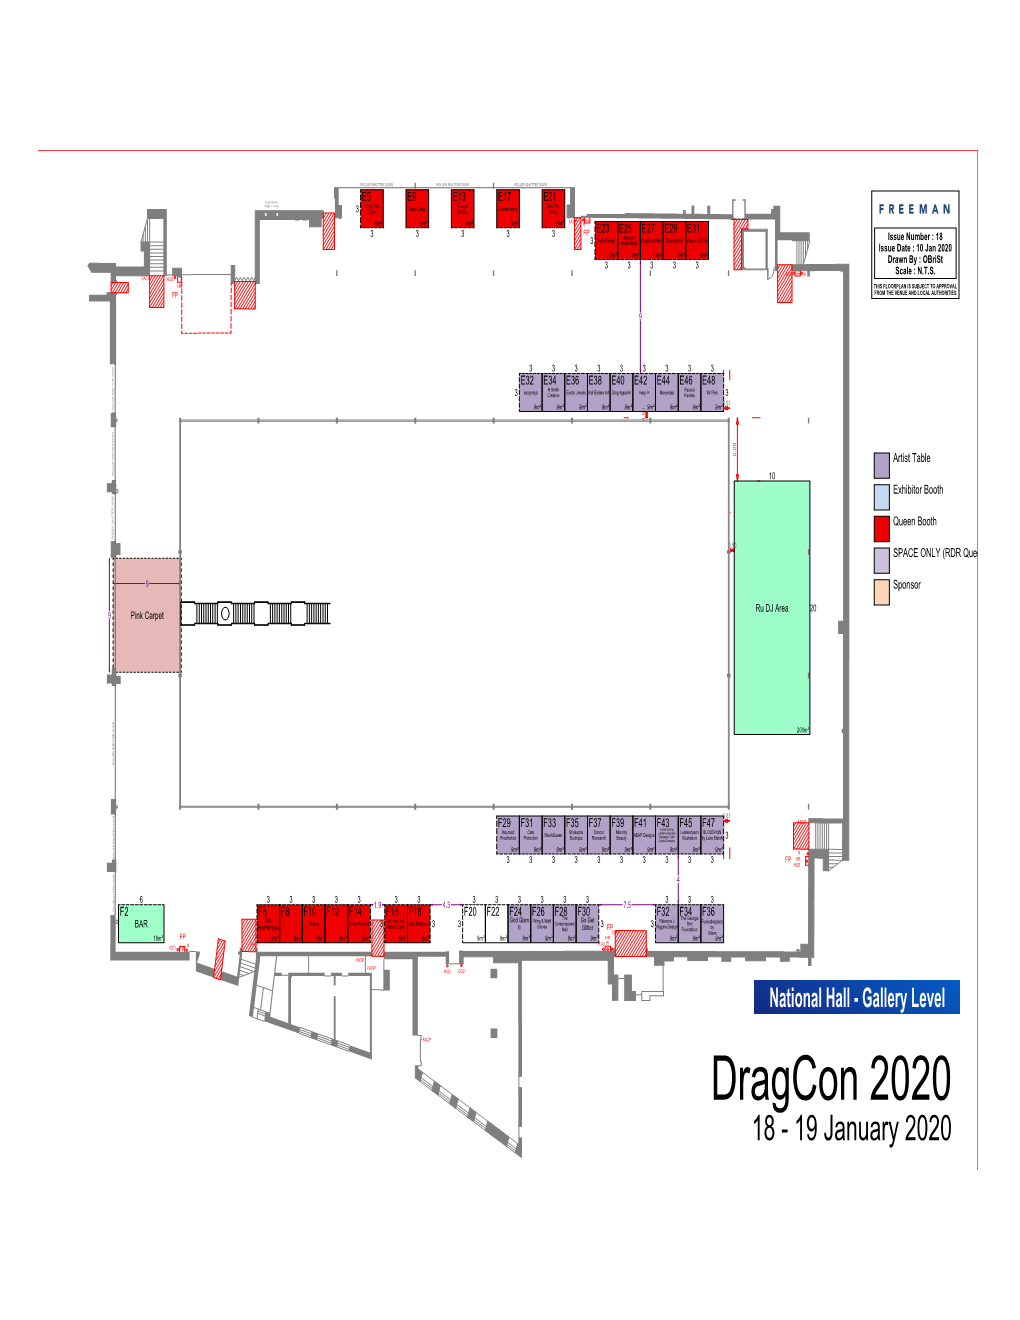 2020 Dragcon 2020 9M² 9M² 9M² 9M² 9M² Drawn by : Obrist 3 3 3 3 3 Scale : N.T.S